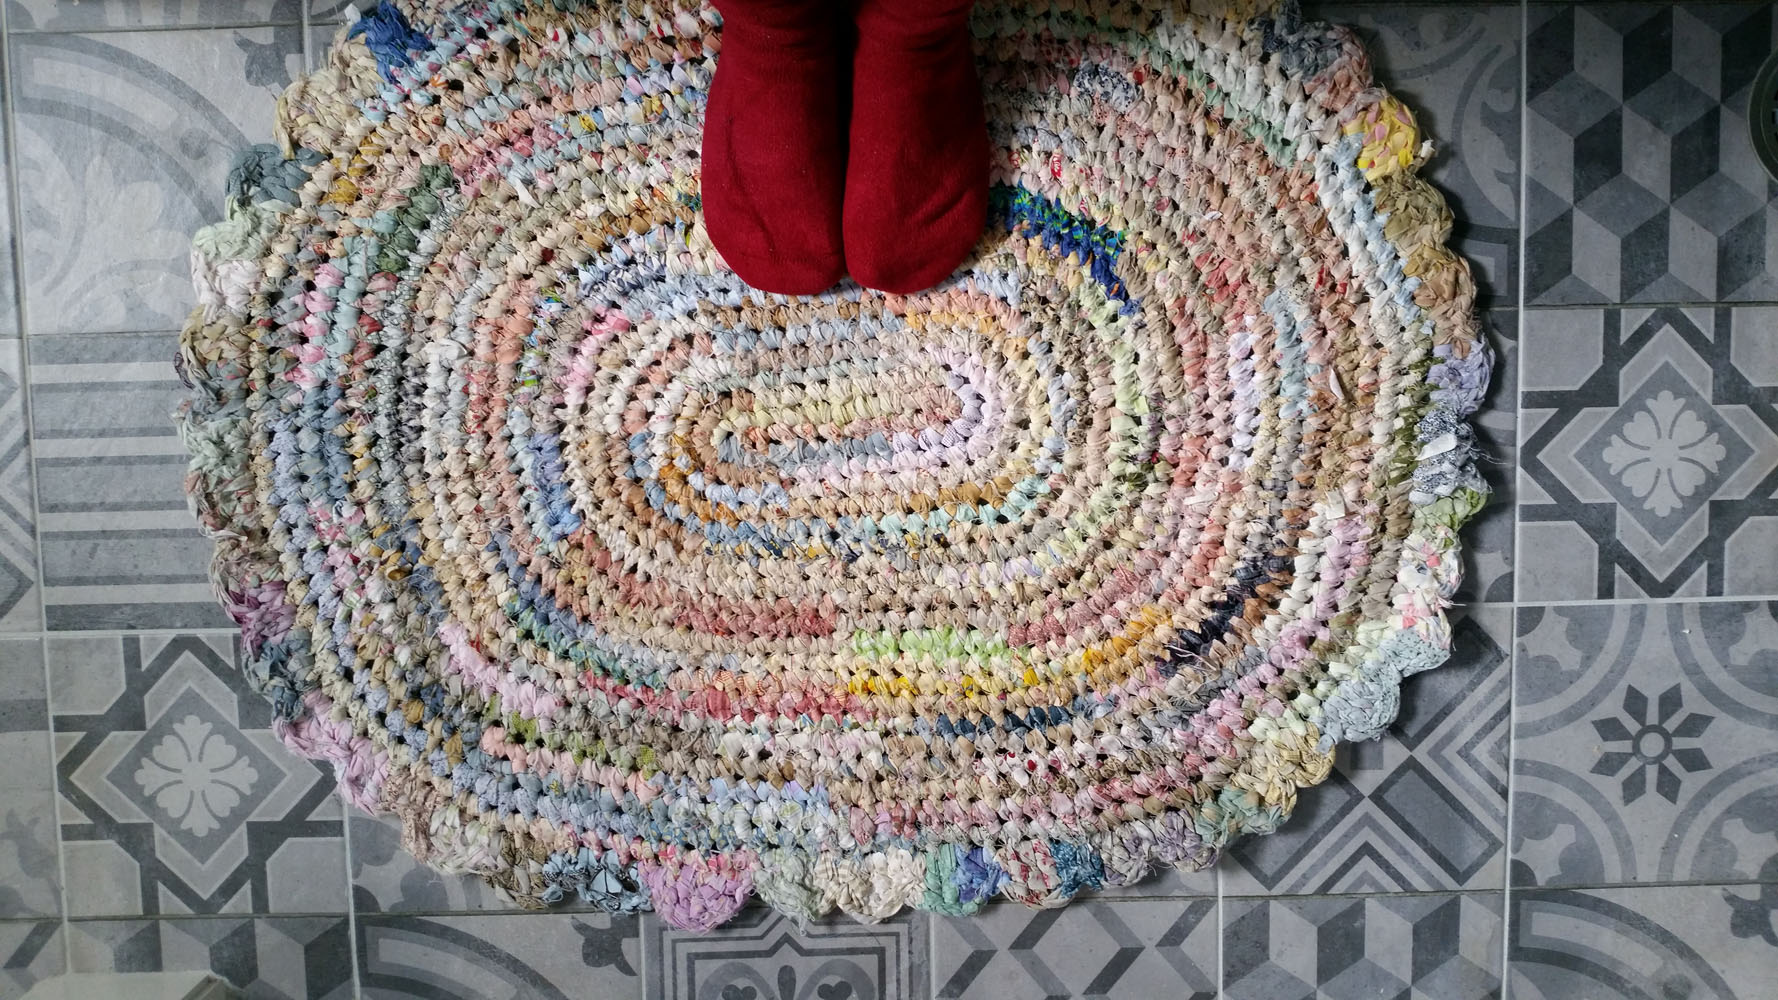 Tutorial – How to Crochet a Rag Rug